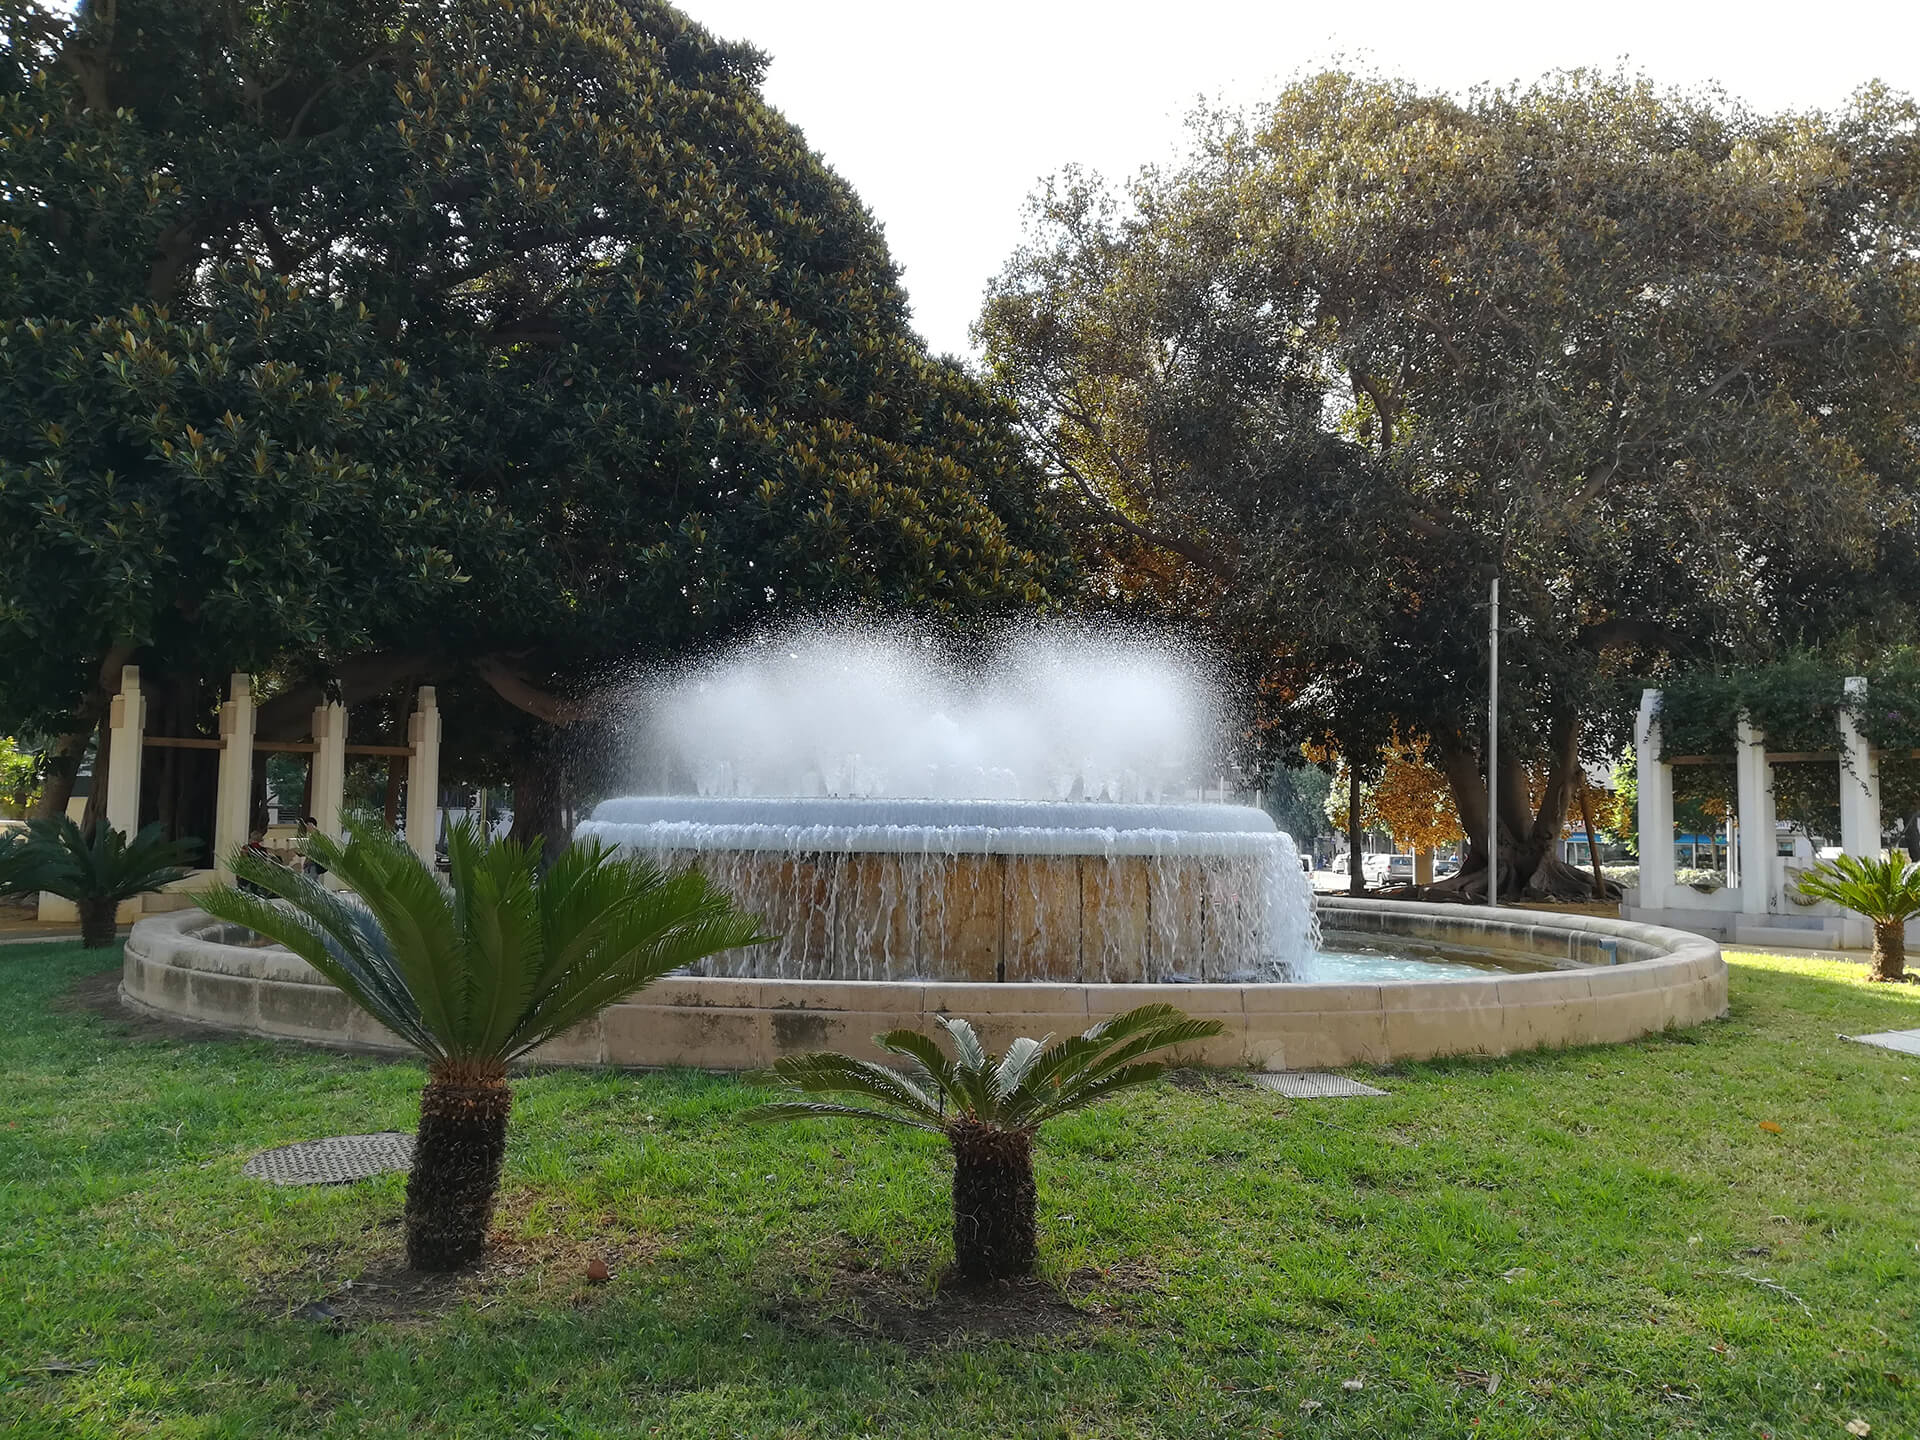 In the park in Cartagena